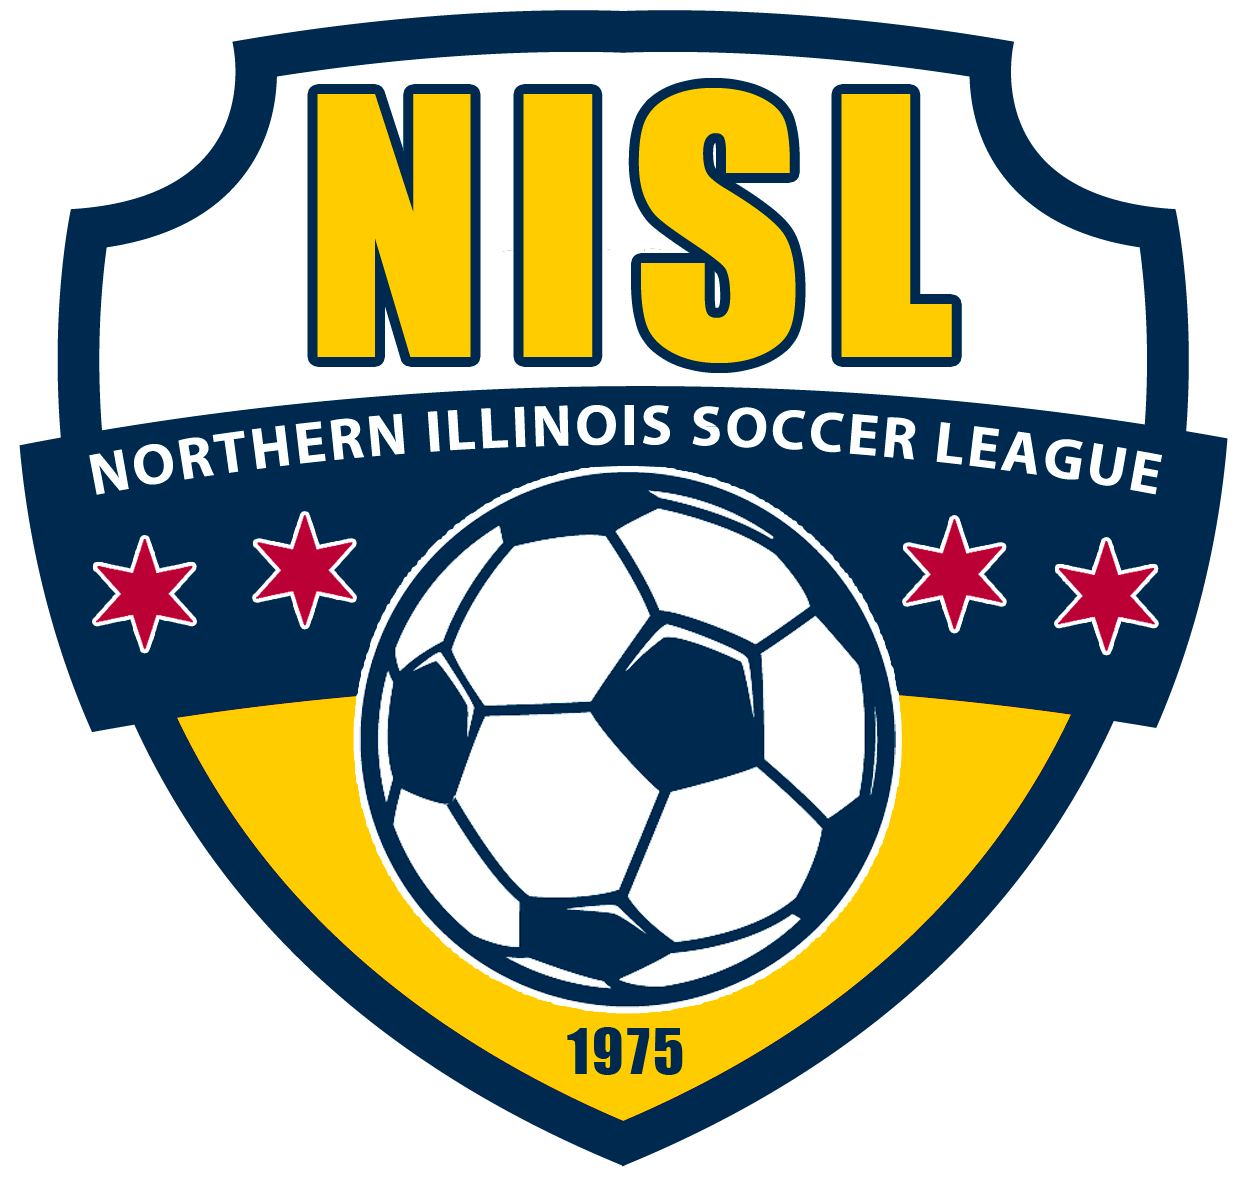 Northern Illinois Soccer League